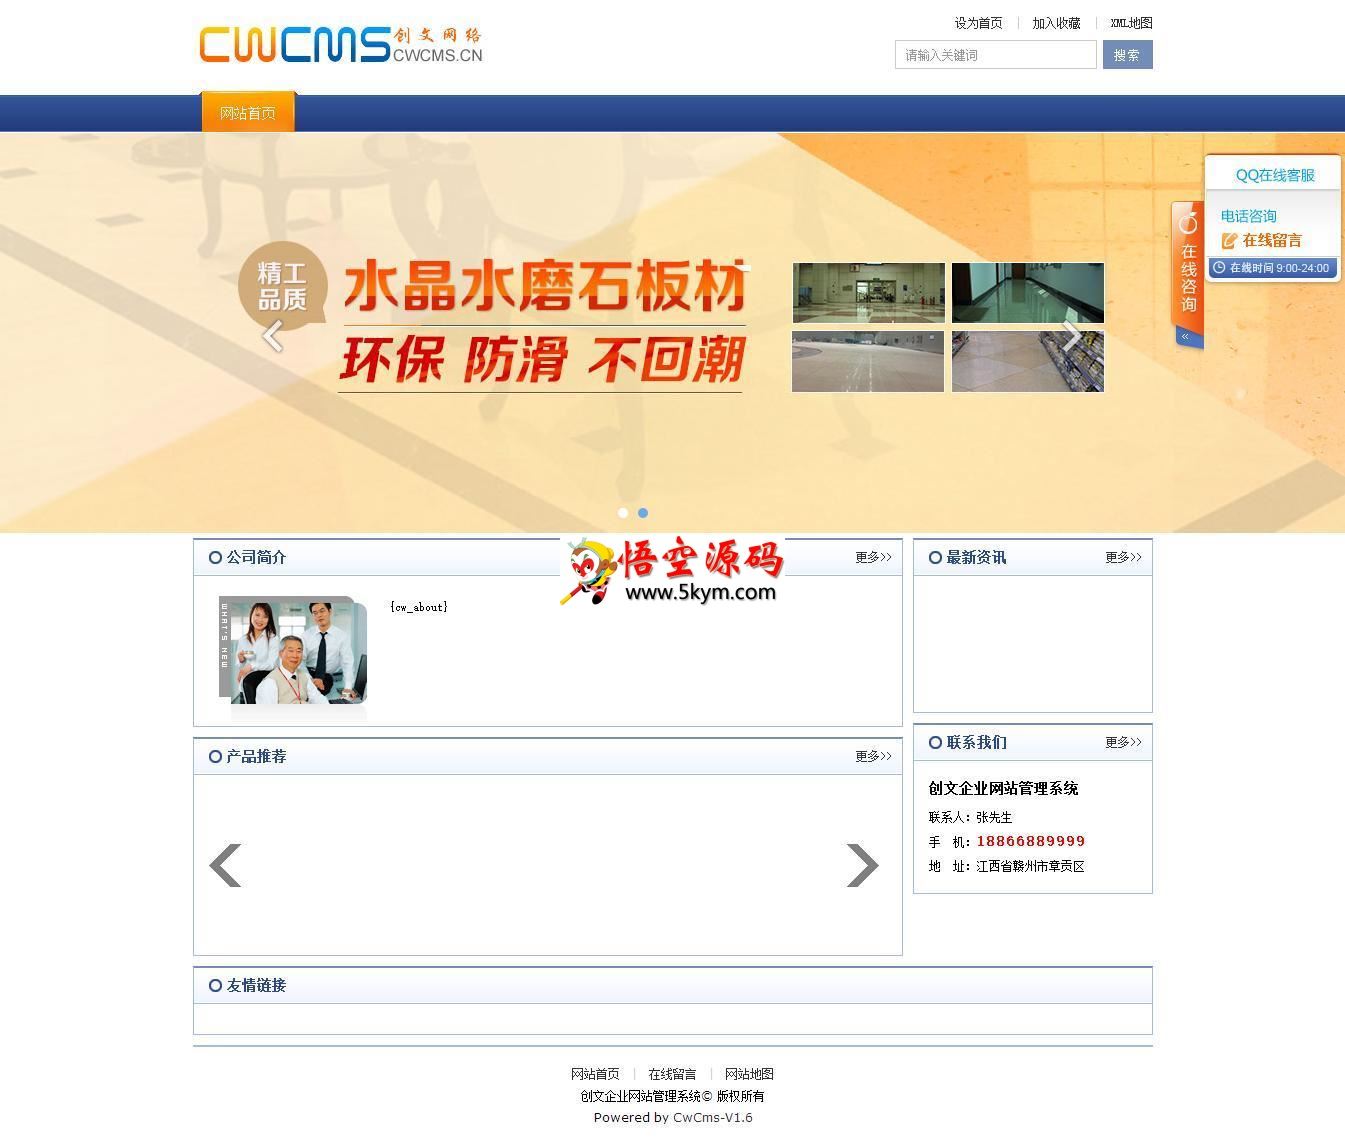 CwCMS创文企业网站管理系统 v1.8